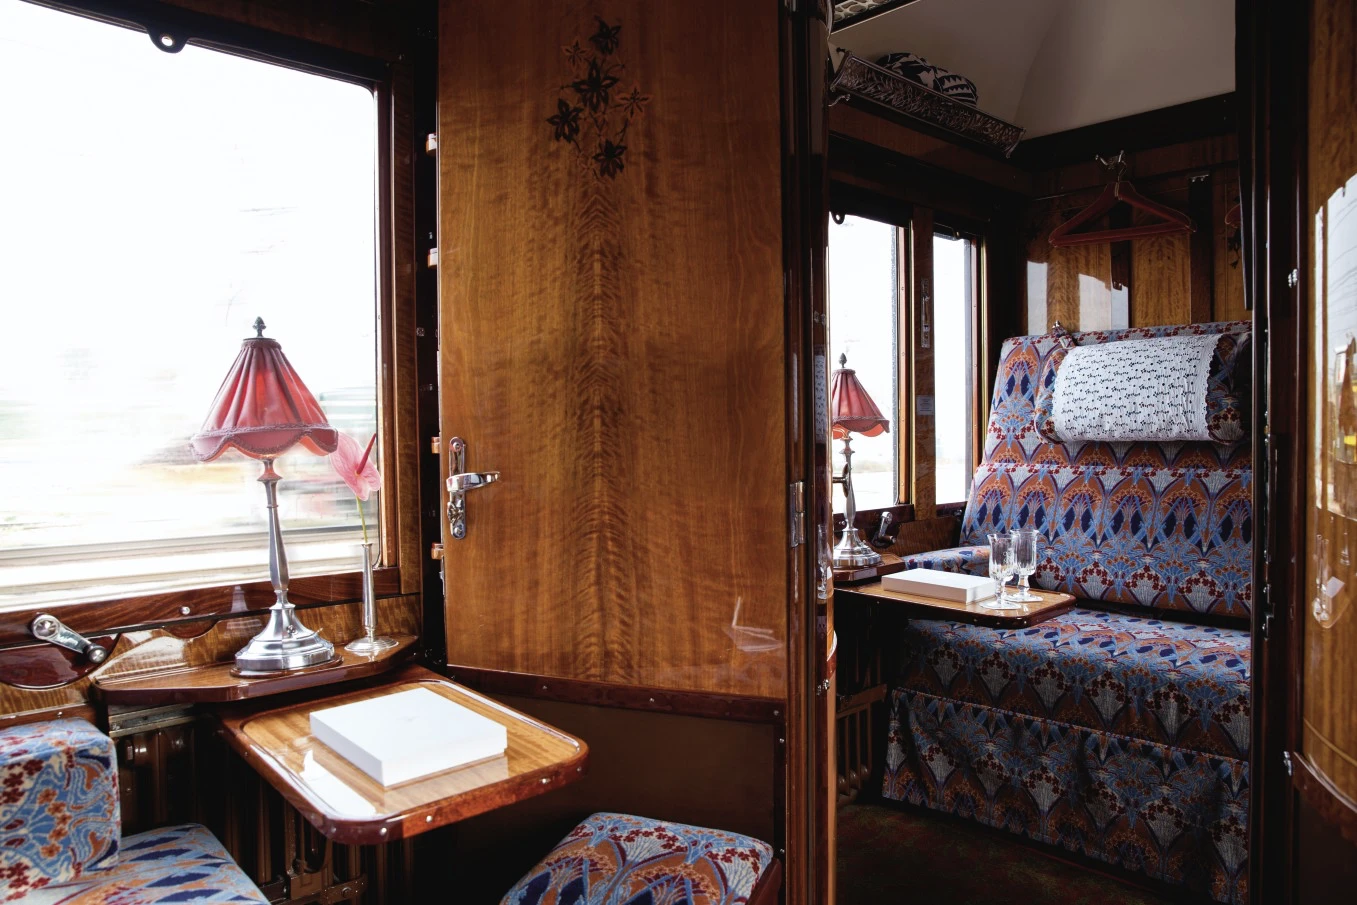 London to Berlin on board the Legendary Venice Simplon-Orient